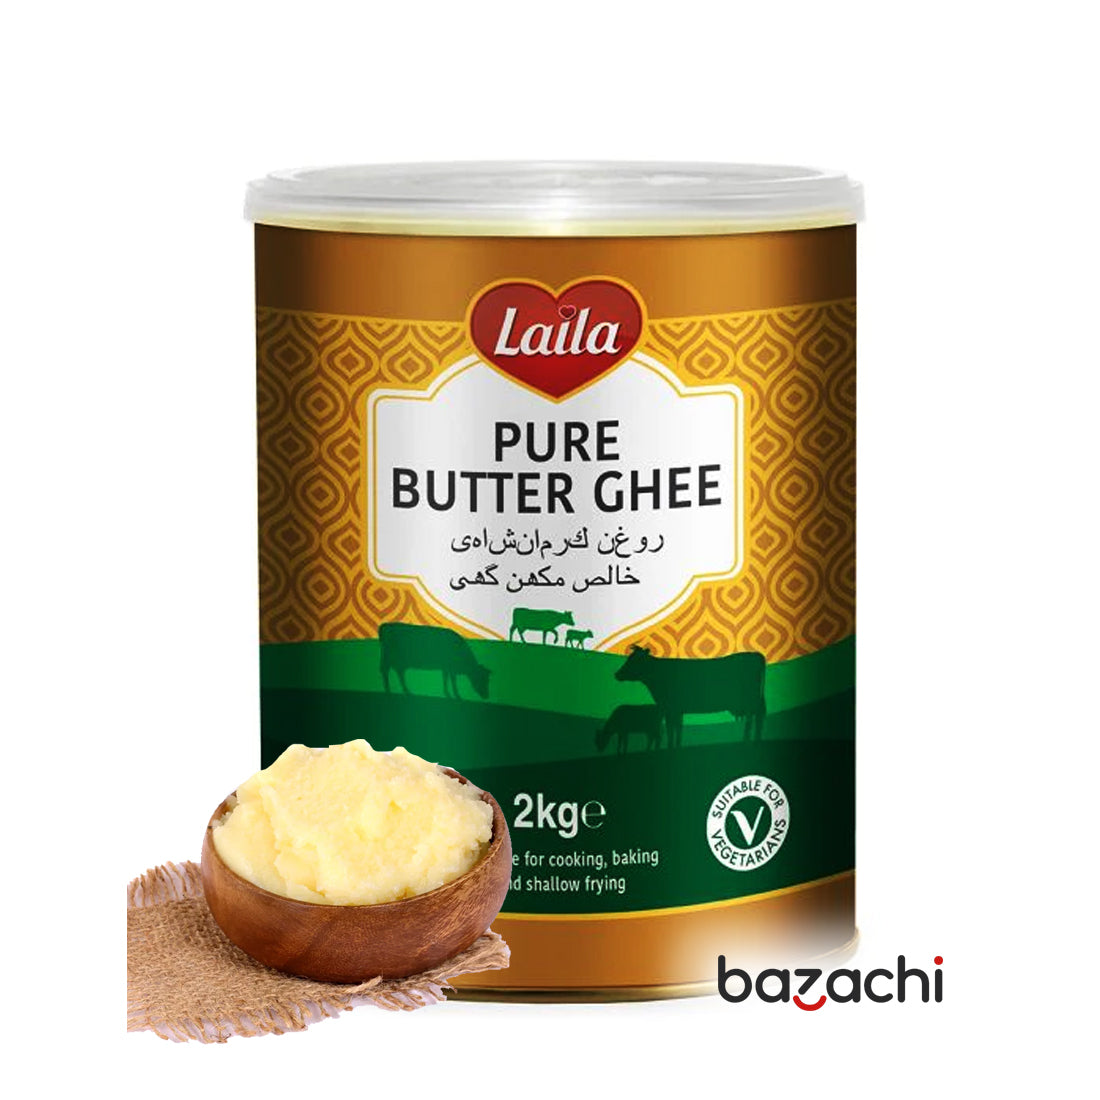 Laila 100% Pure Butter Ghee - 2kg